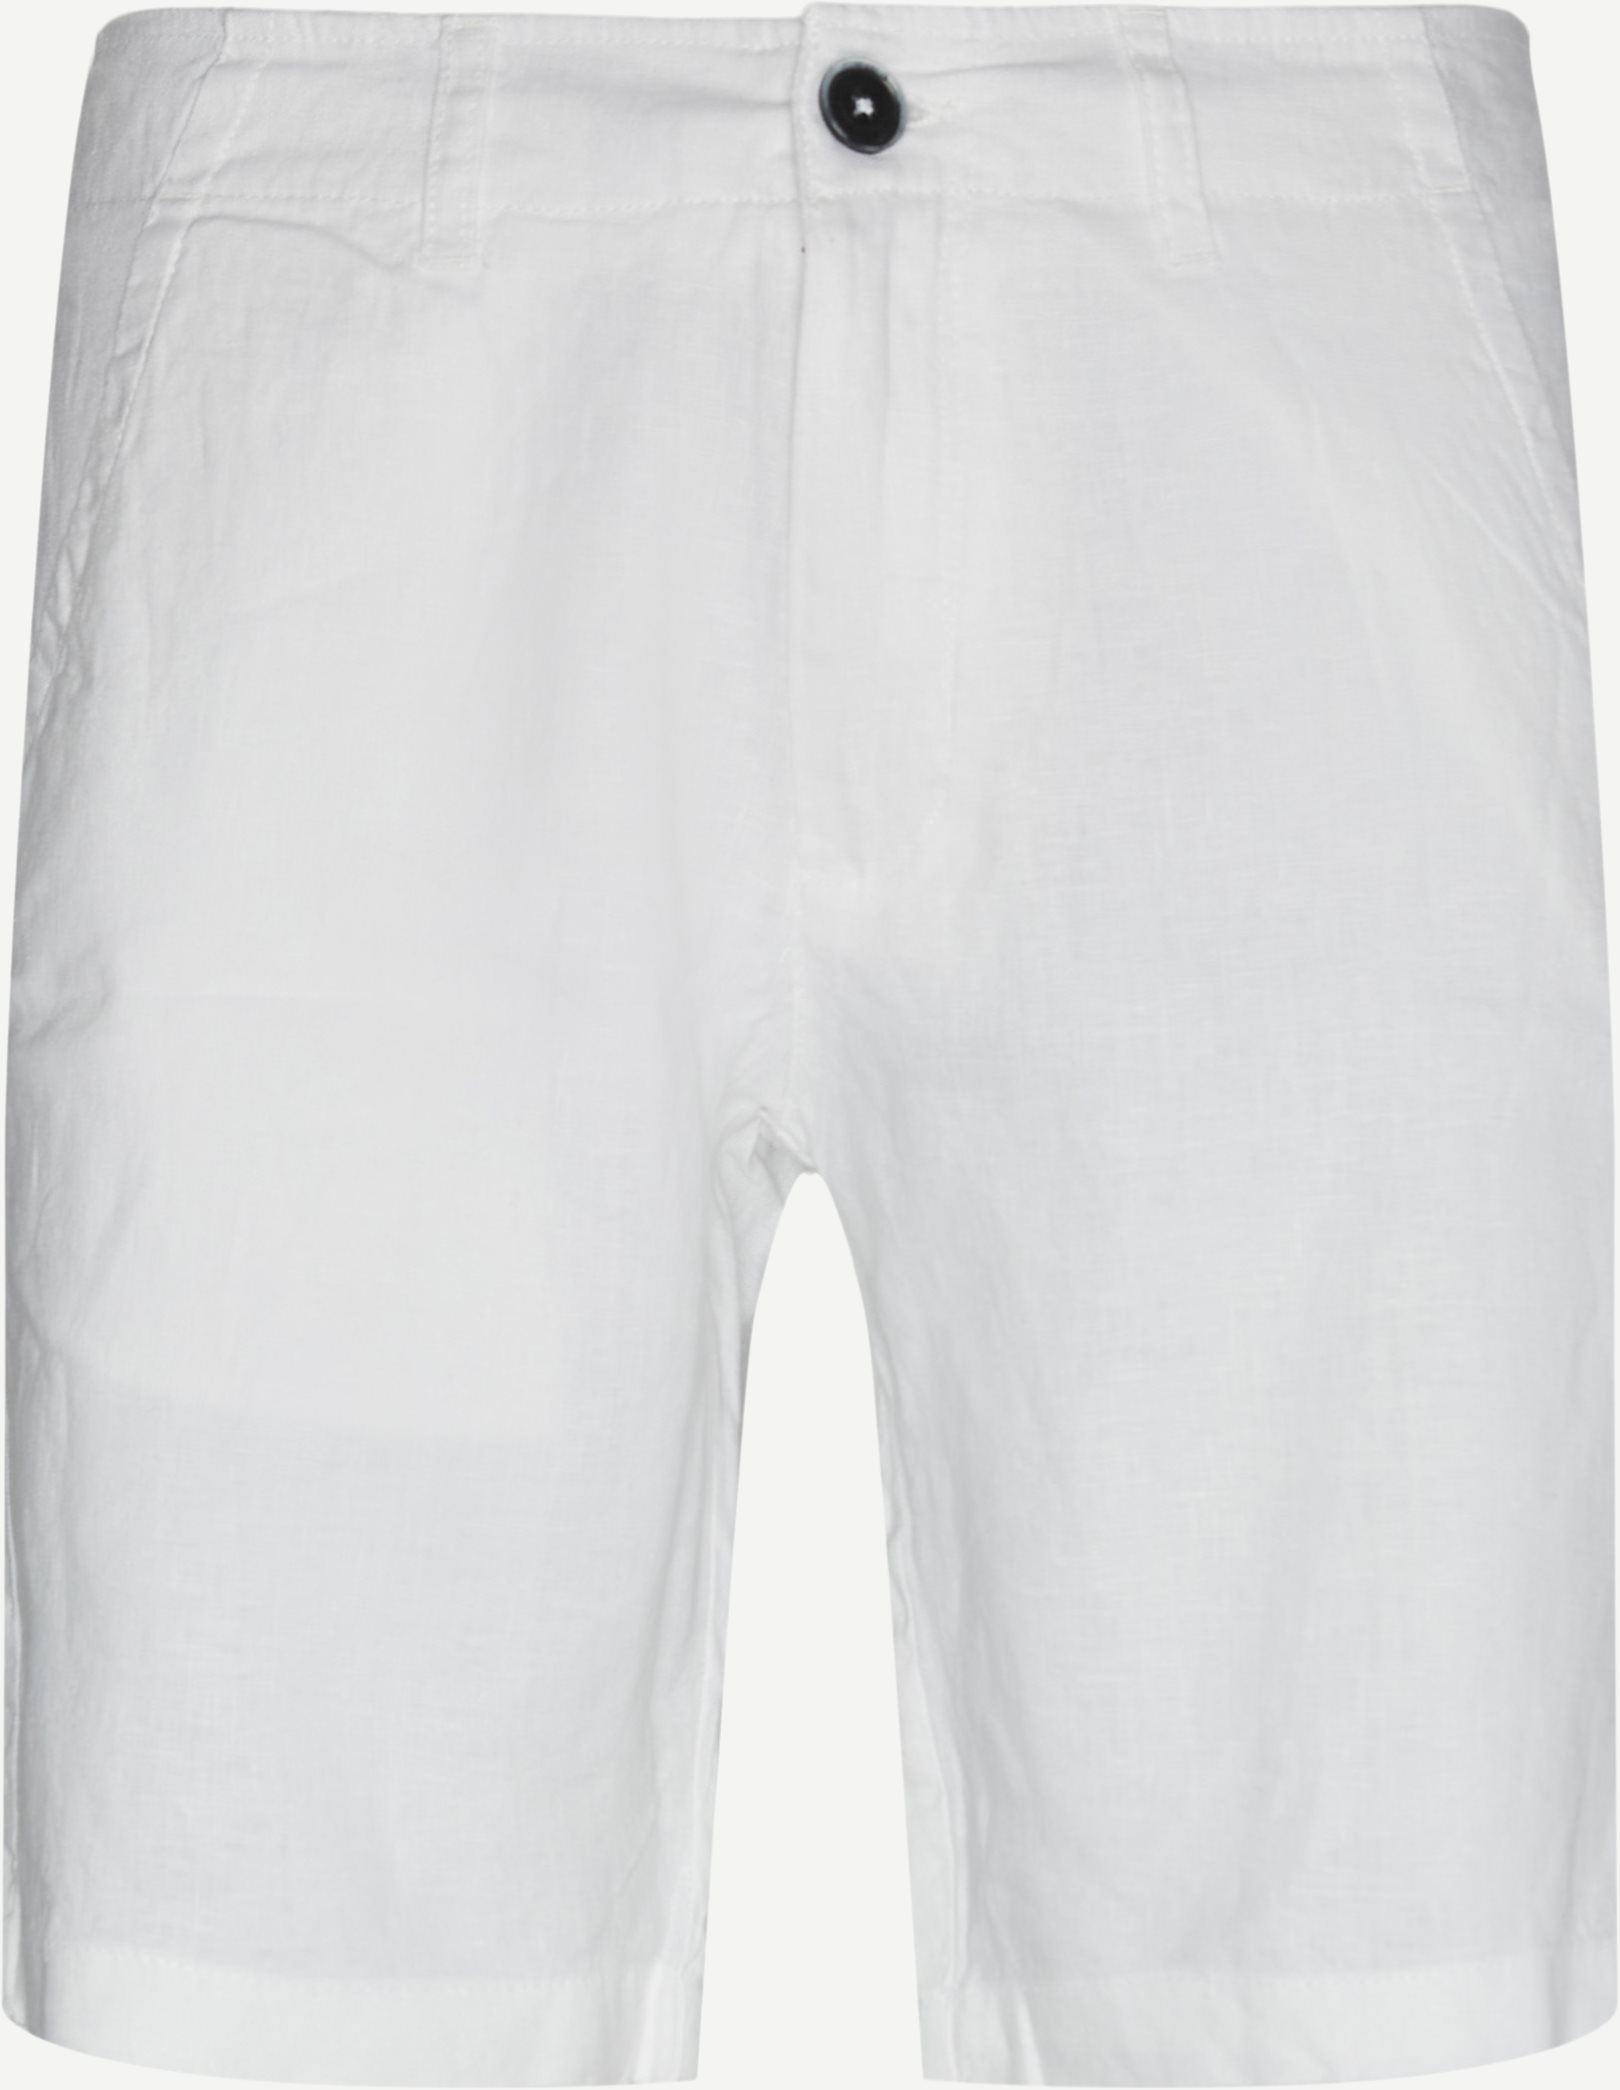 Mosby Shorts - Shorts - Regular fit - Hvid